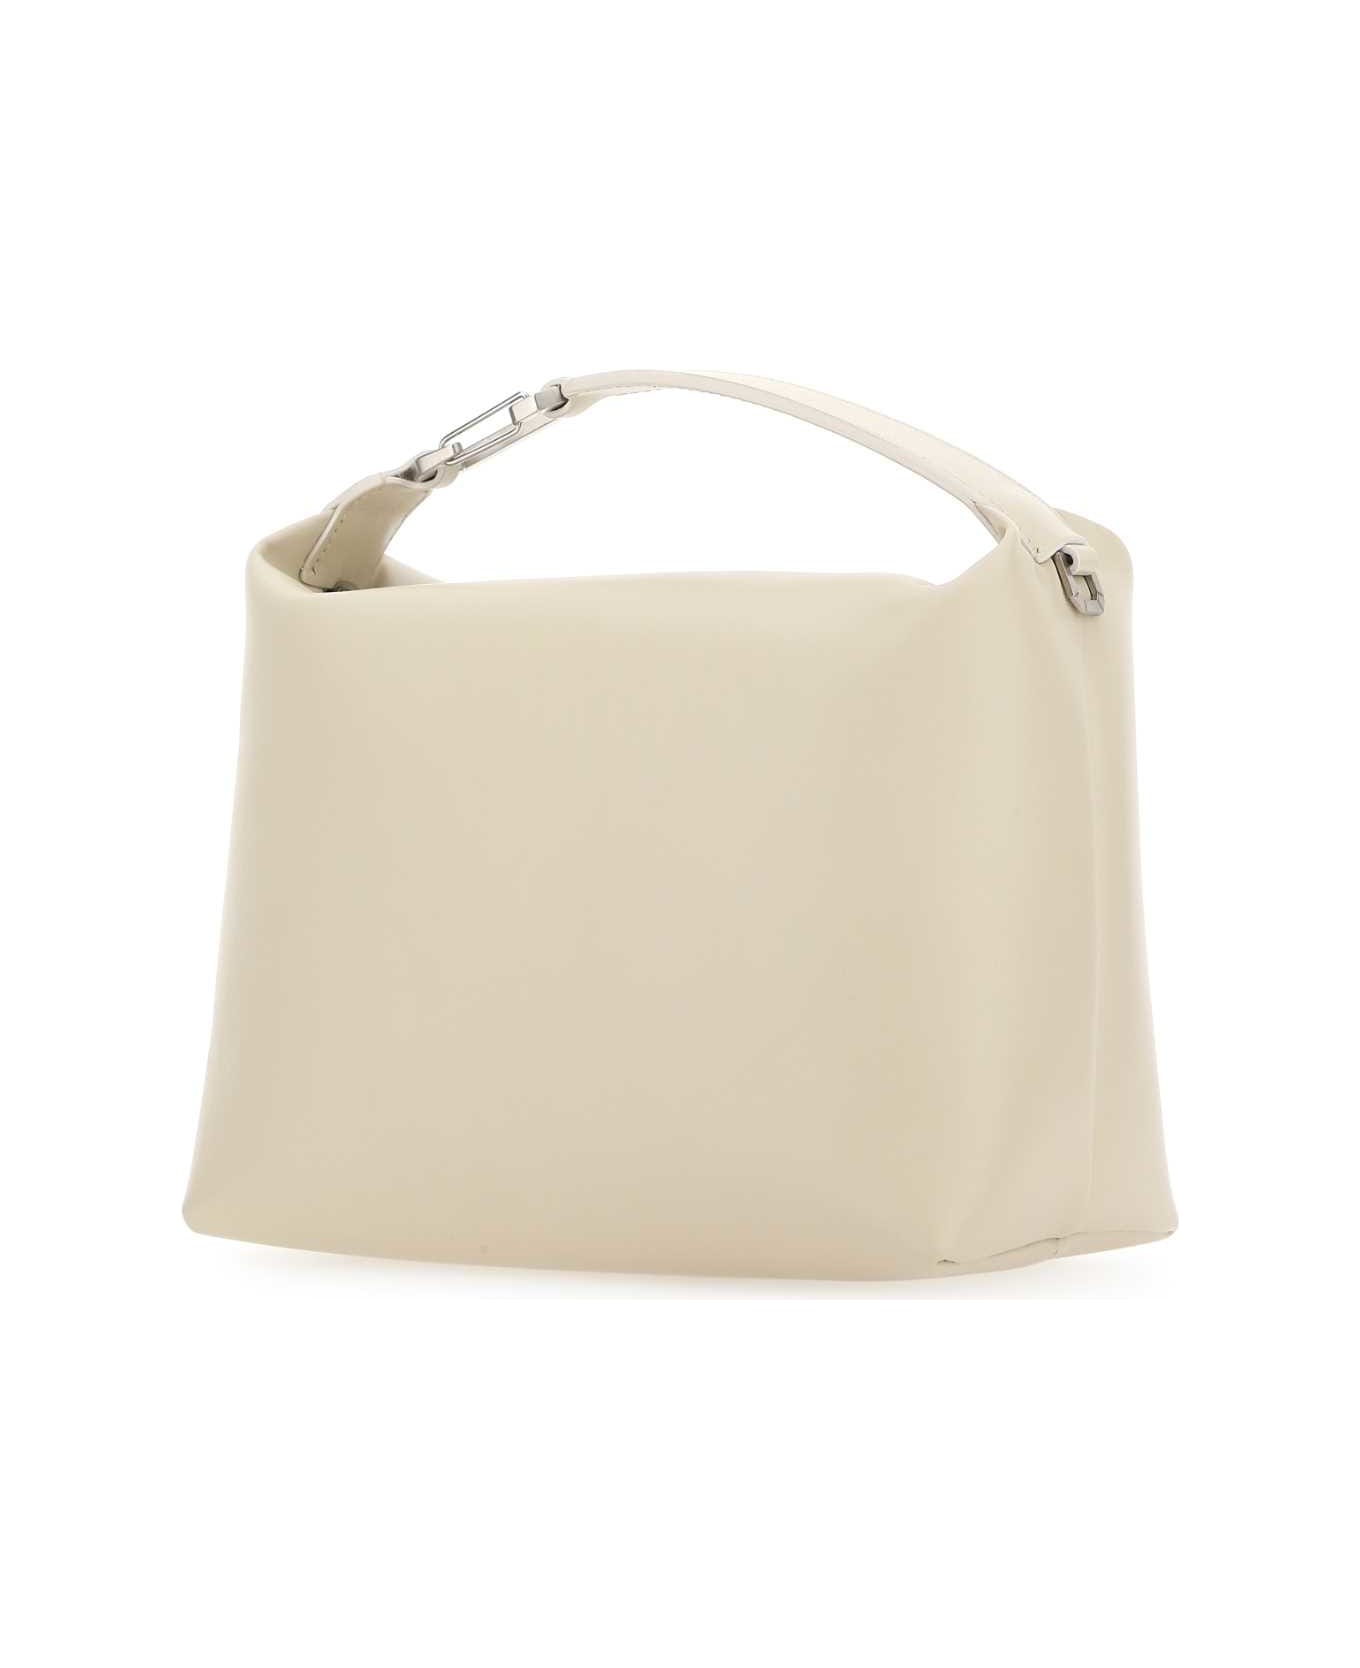 EÉRA Sand Leather Moonbag Handbag - IVORY